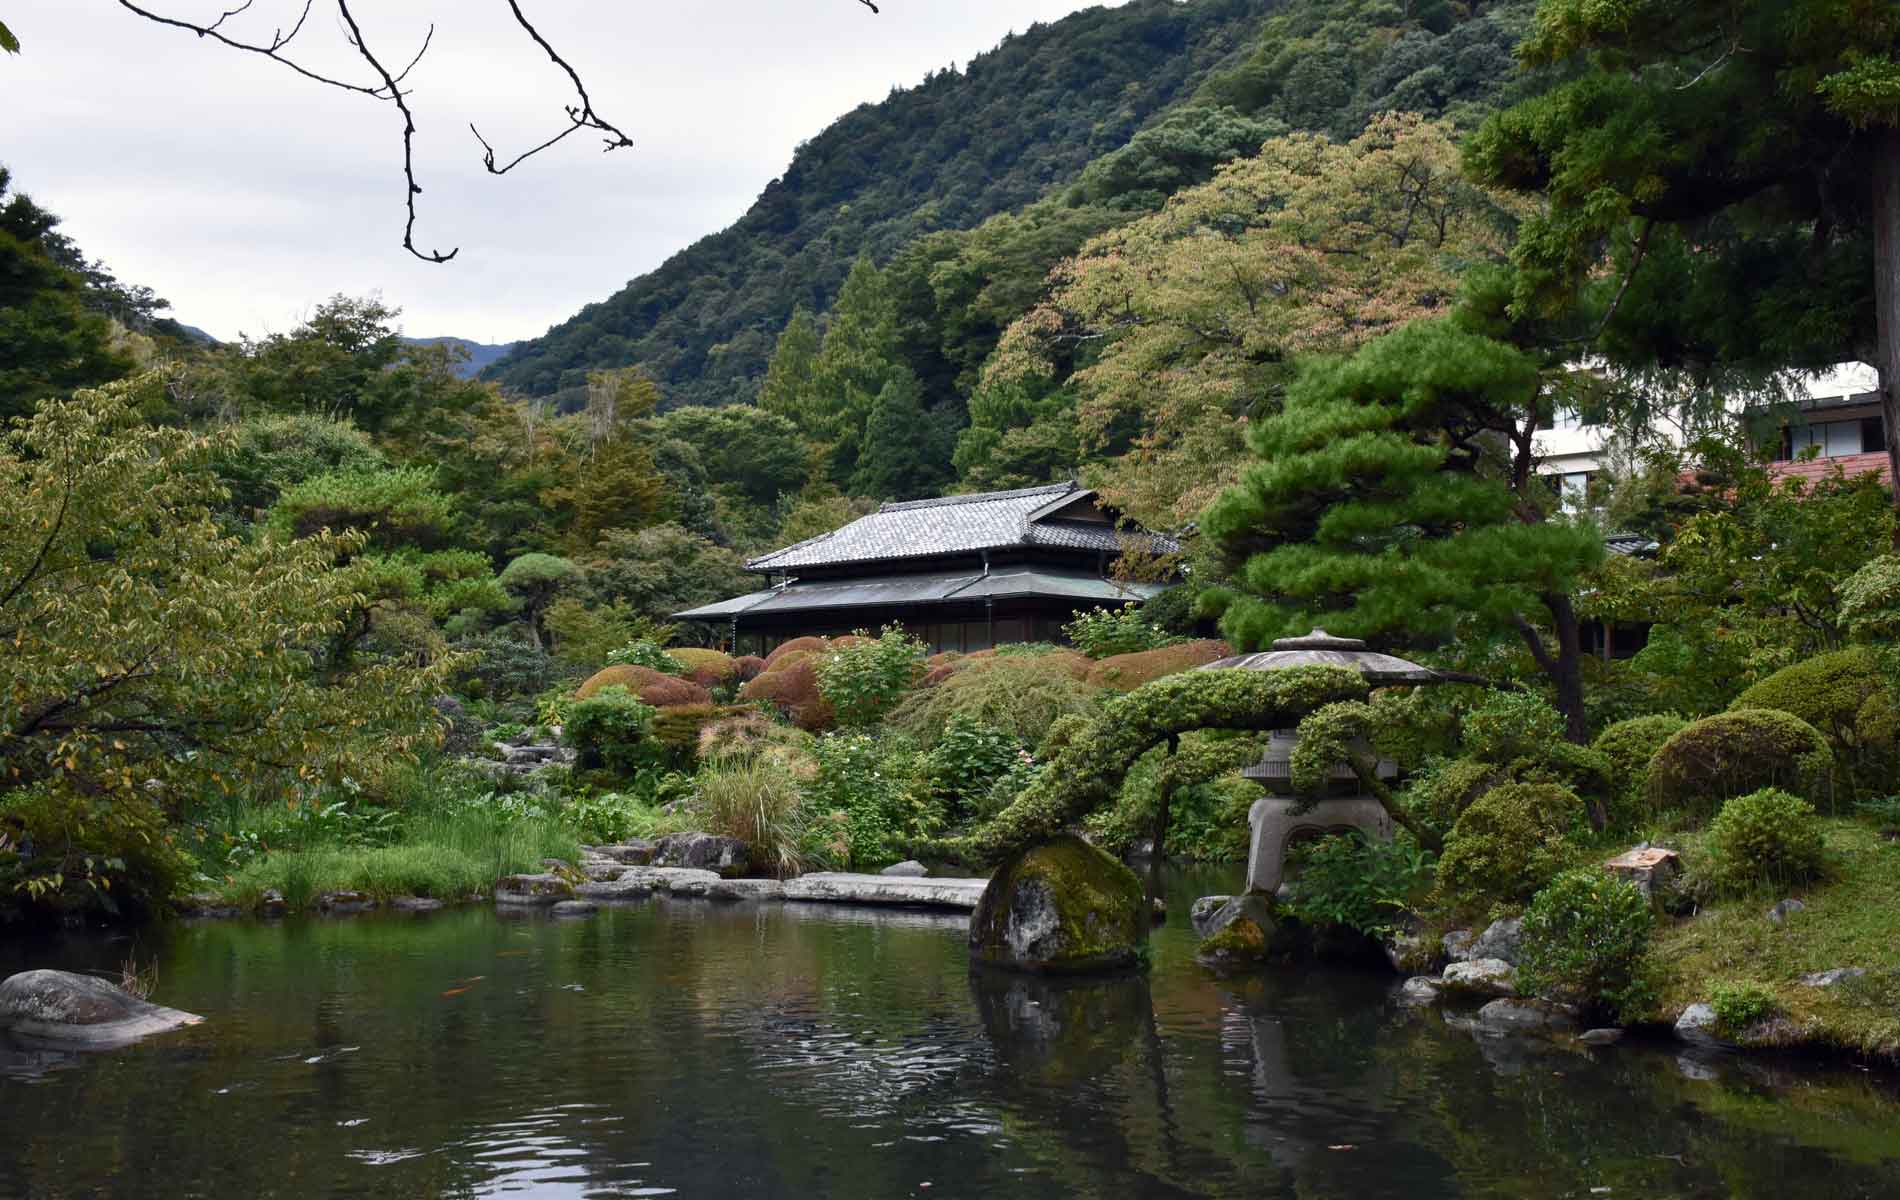 A traditional Japanese inn or Ryokan